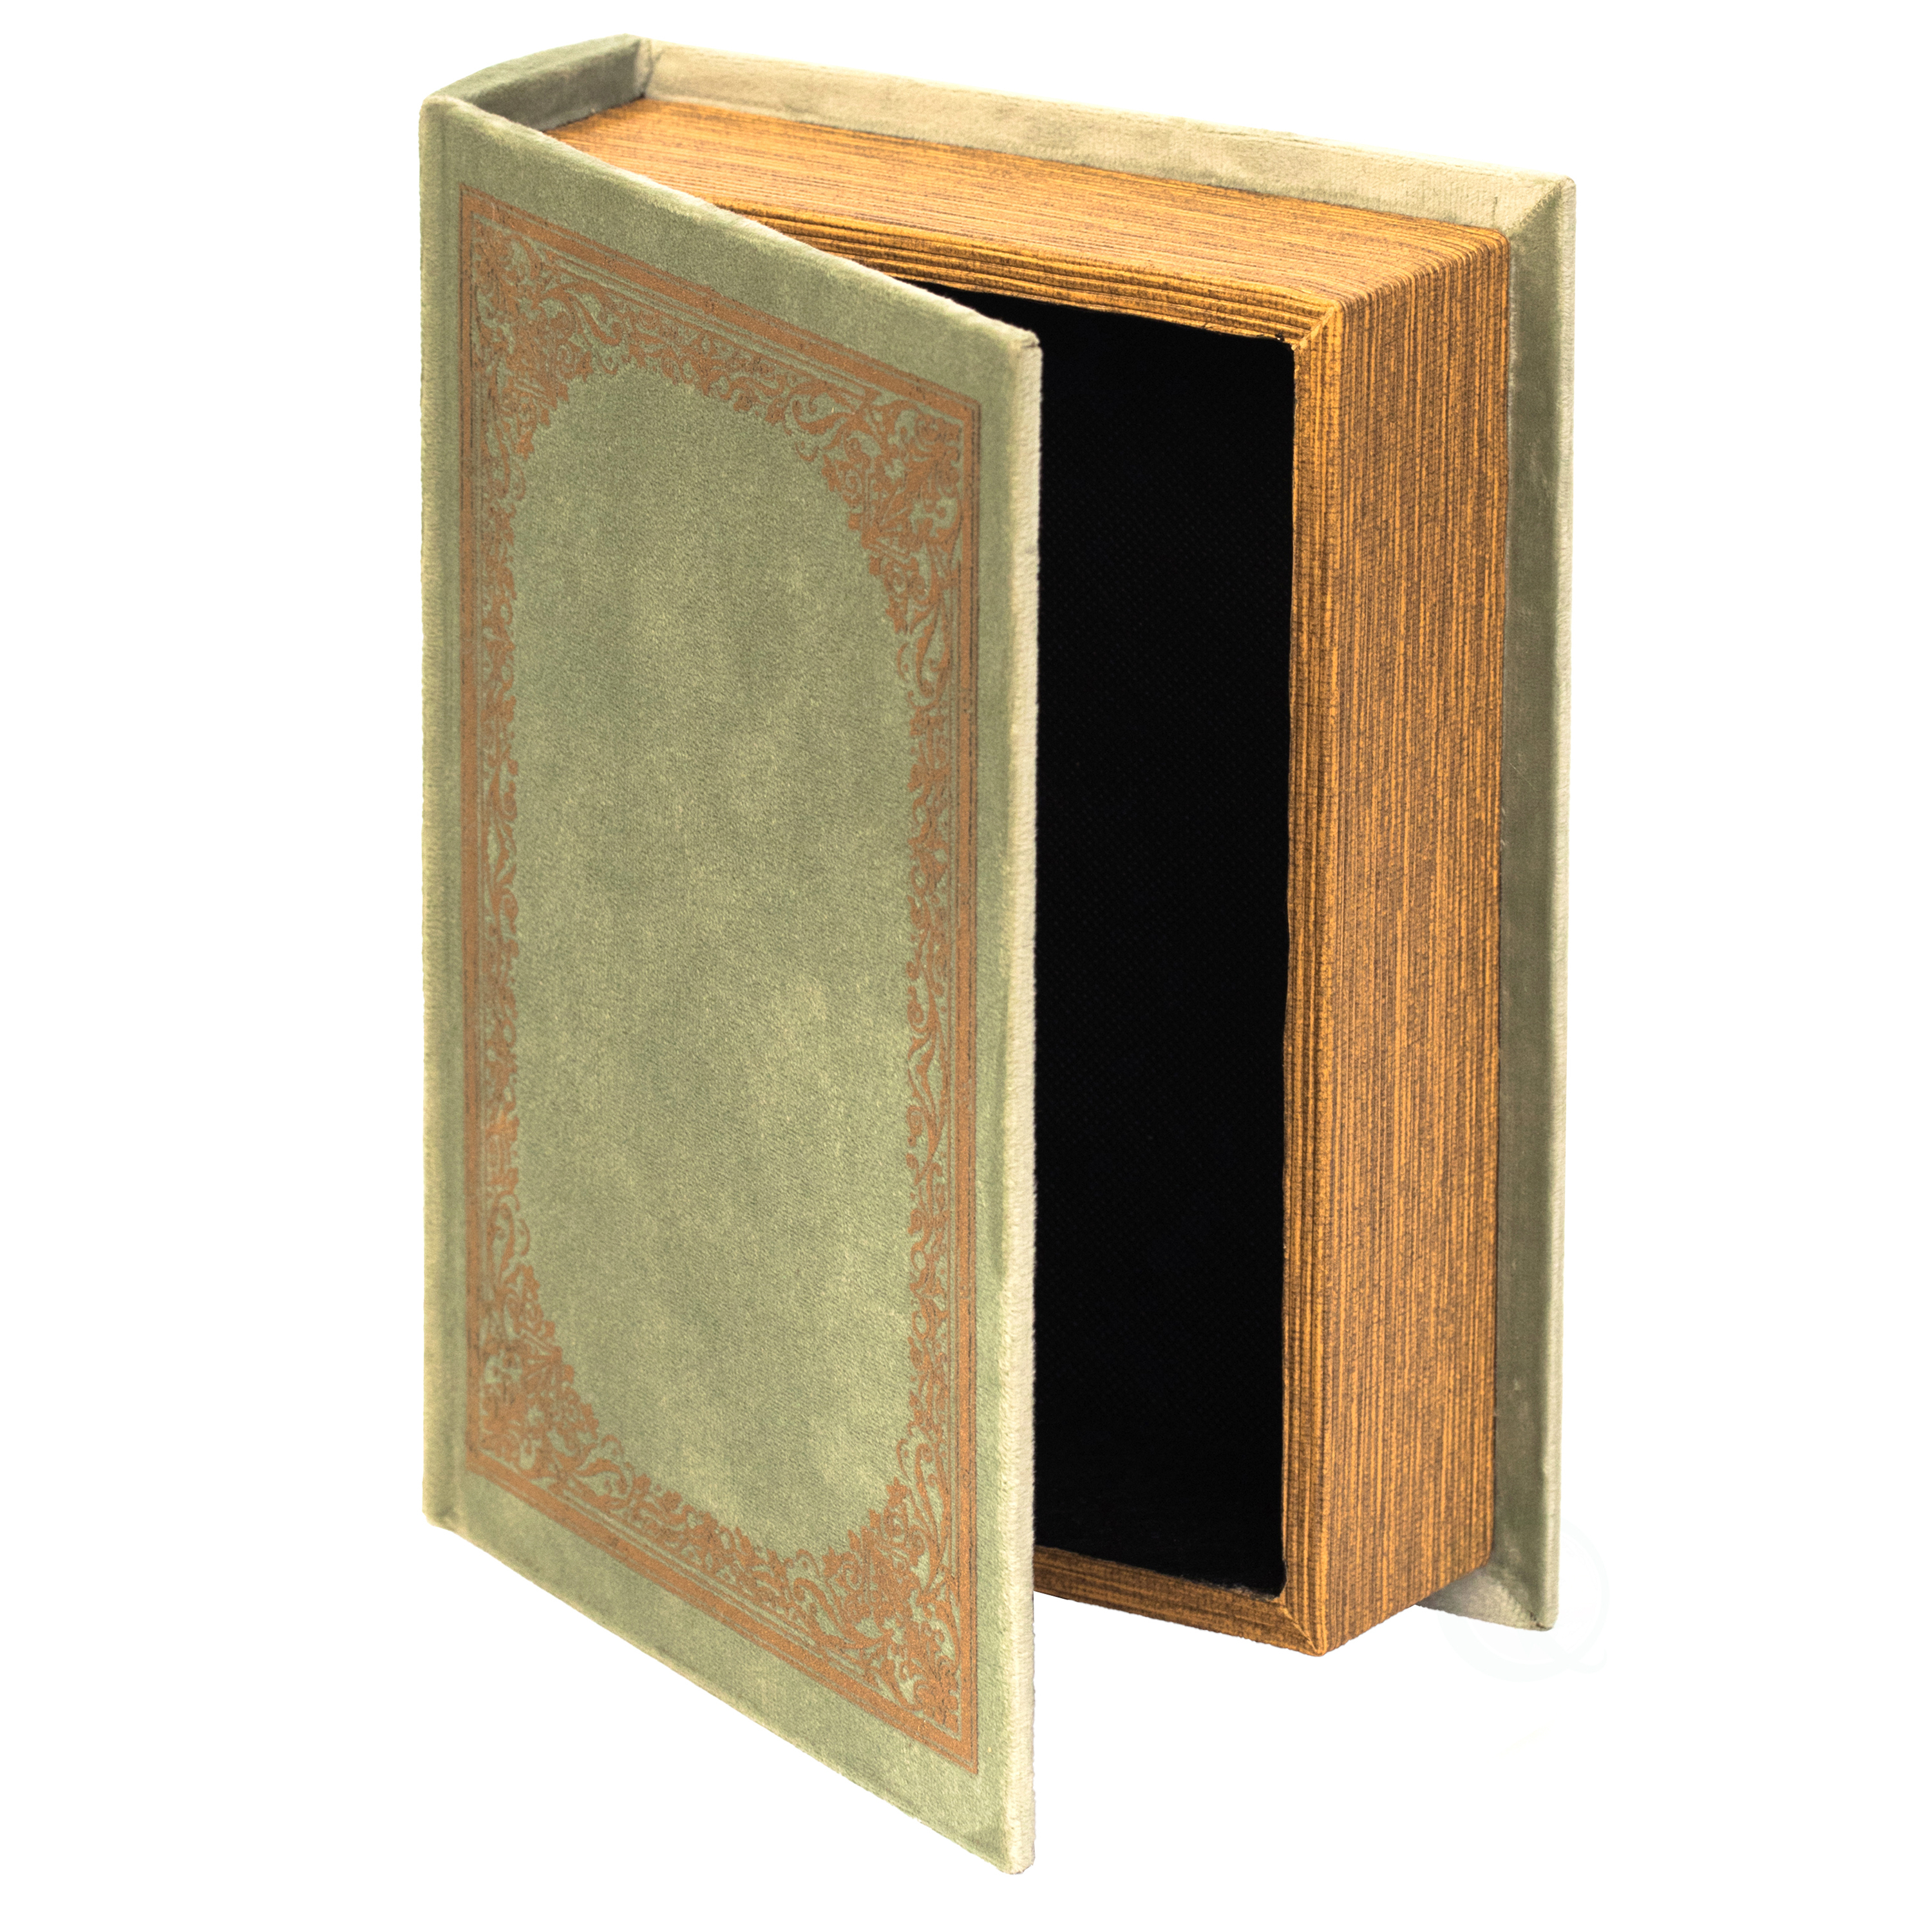 Decorative Vintage Book Shaped Trinket Storage Box - Antique Green